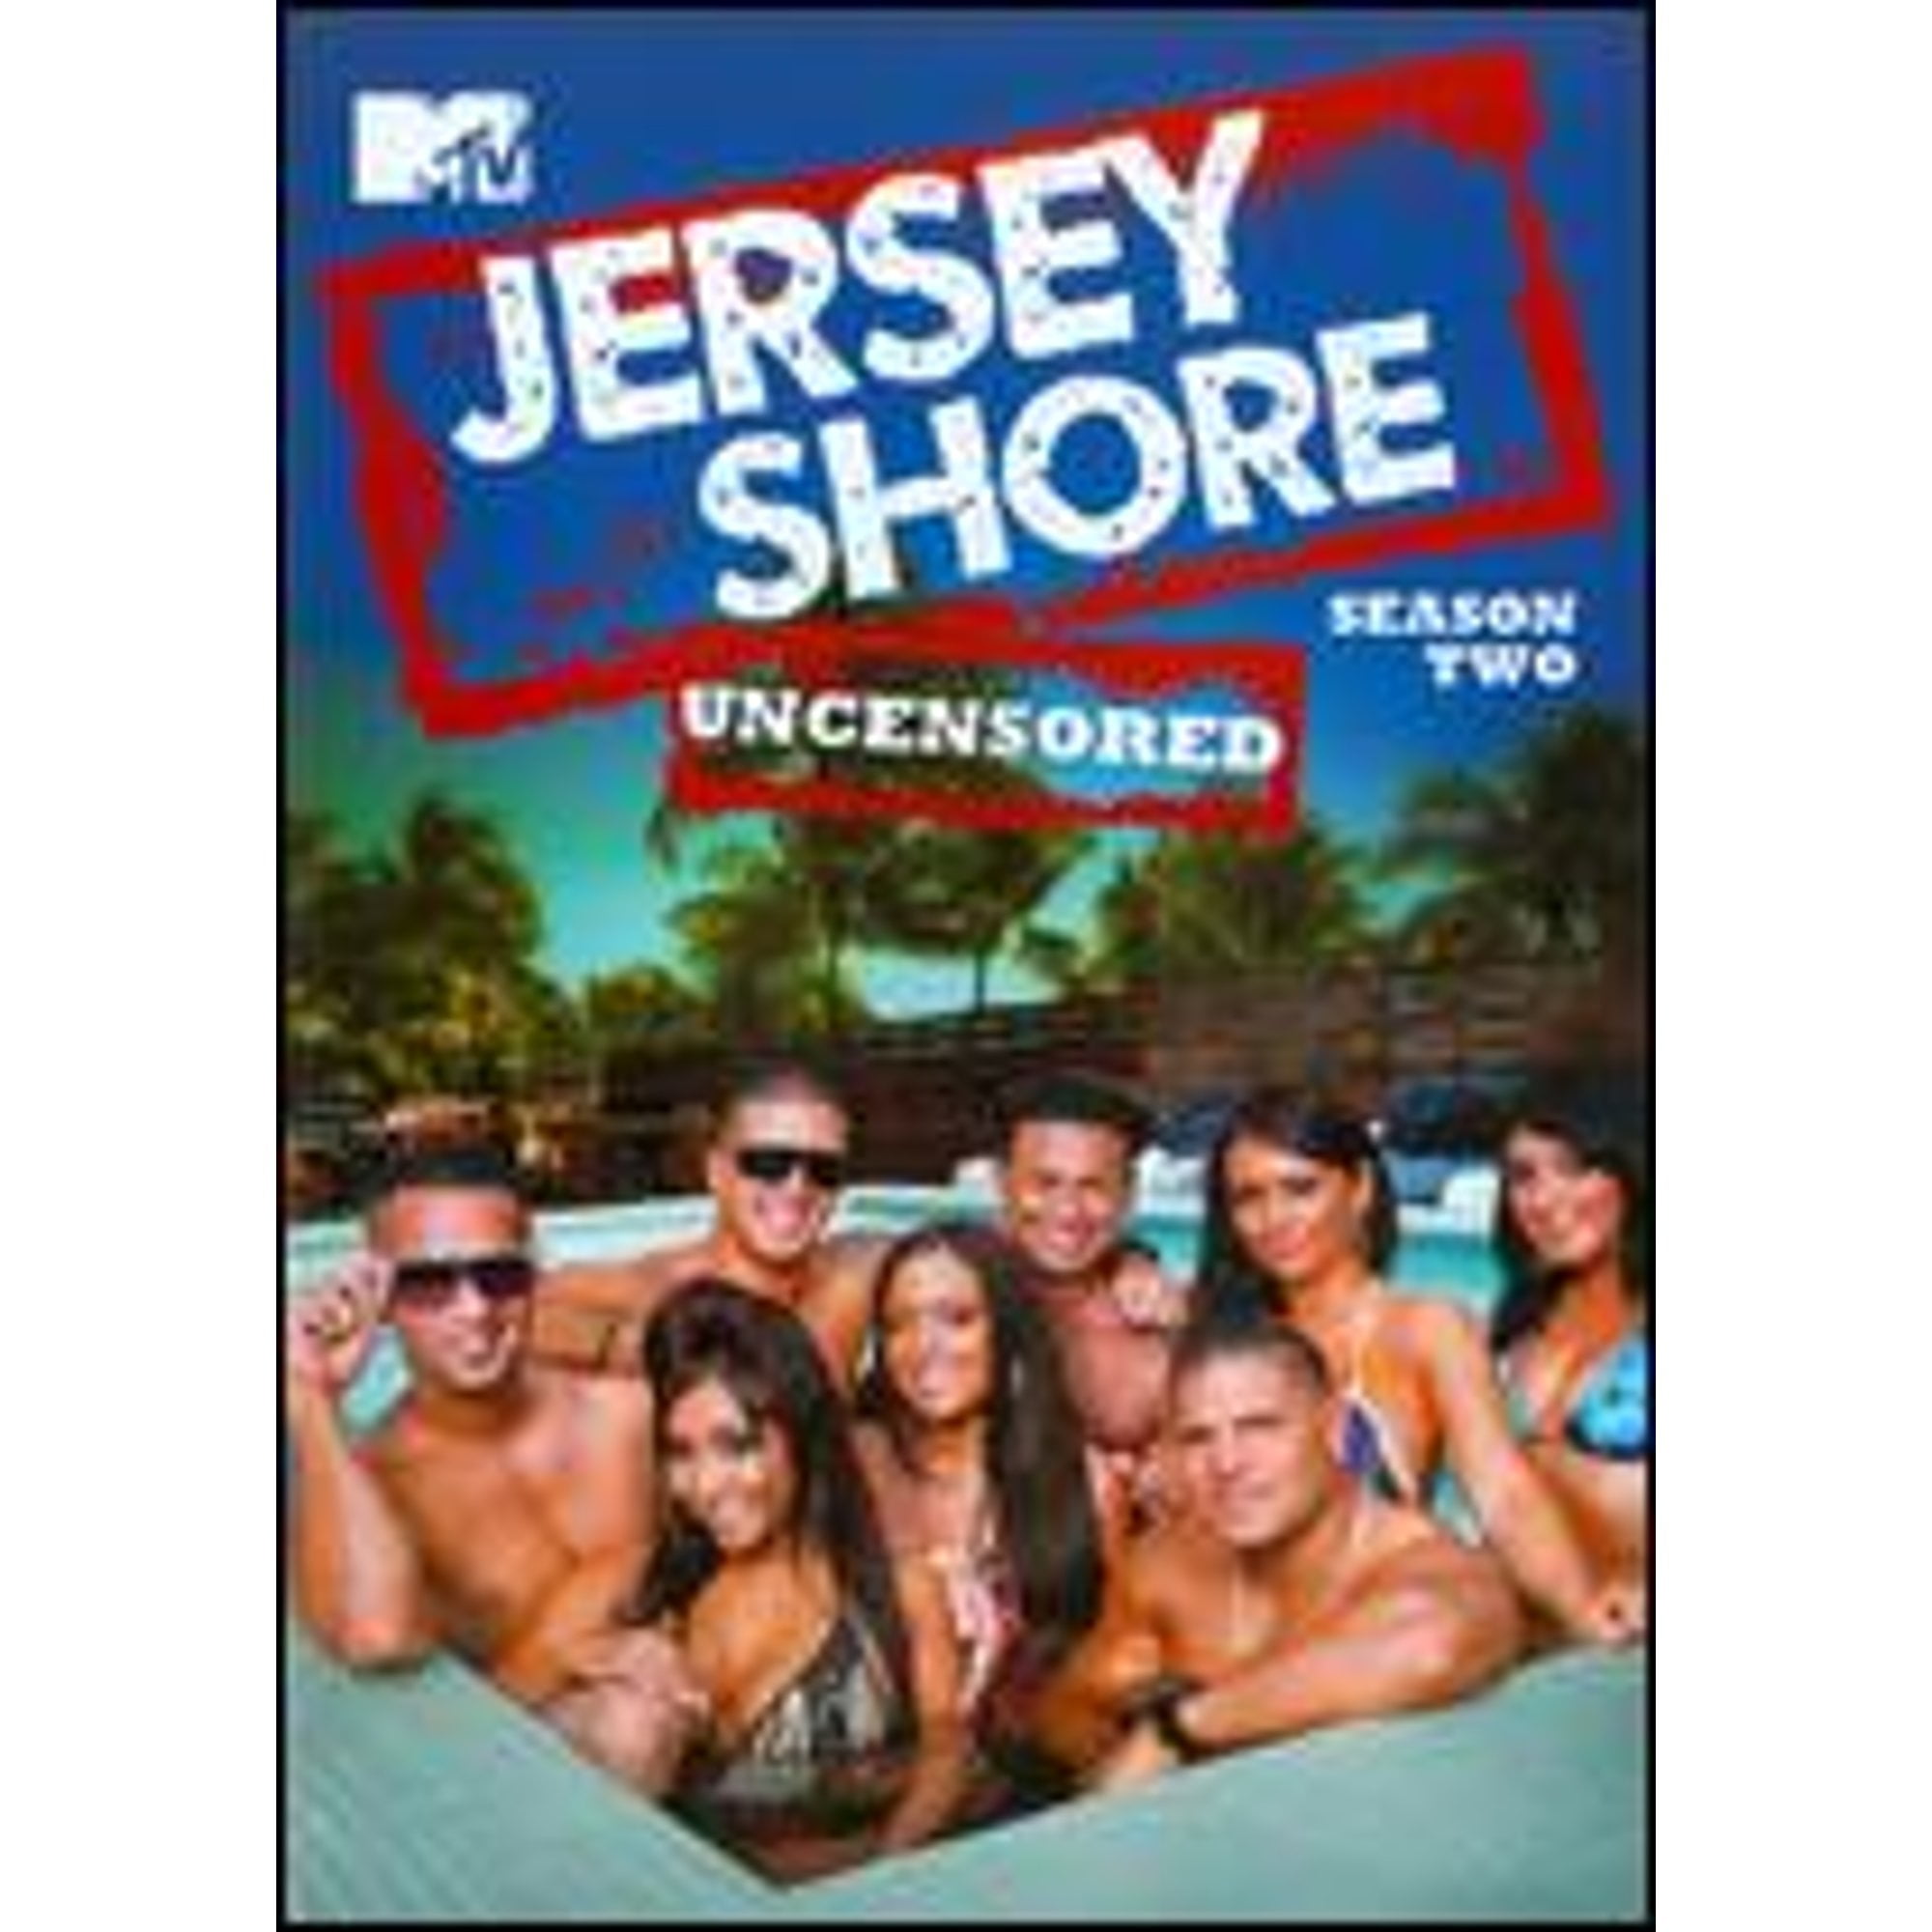 Inademen Nu al kruising Jersey Shore: Season Two Uncensored [4 Discs] (Pre-Owned DVD 0097368213746)  - Walmart.com